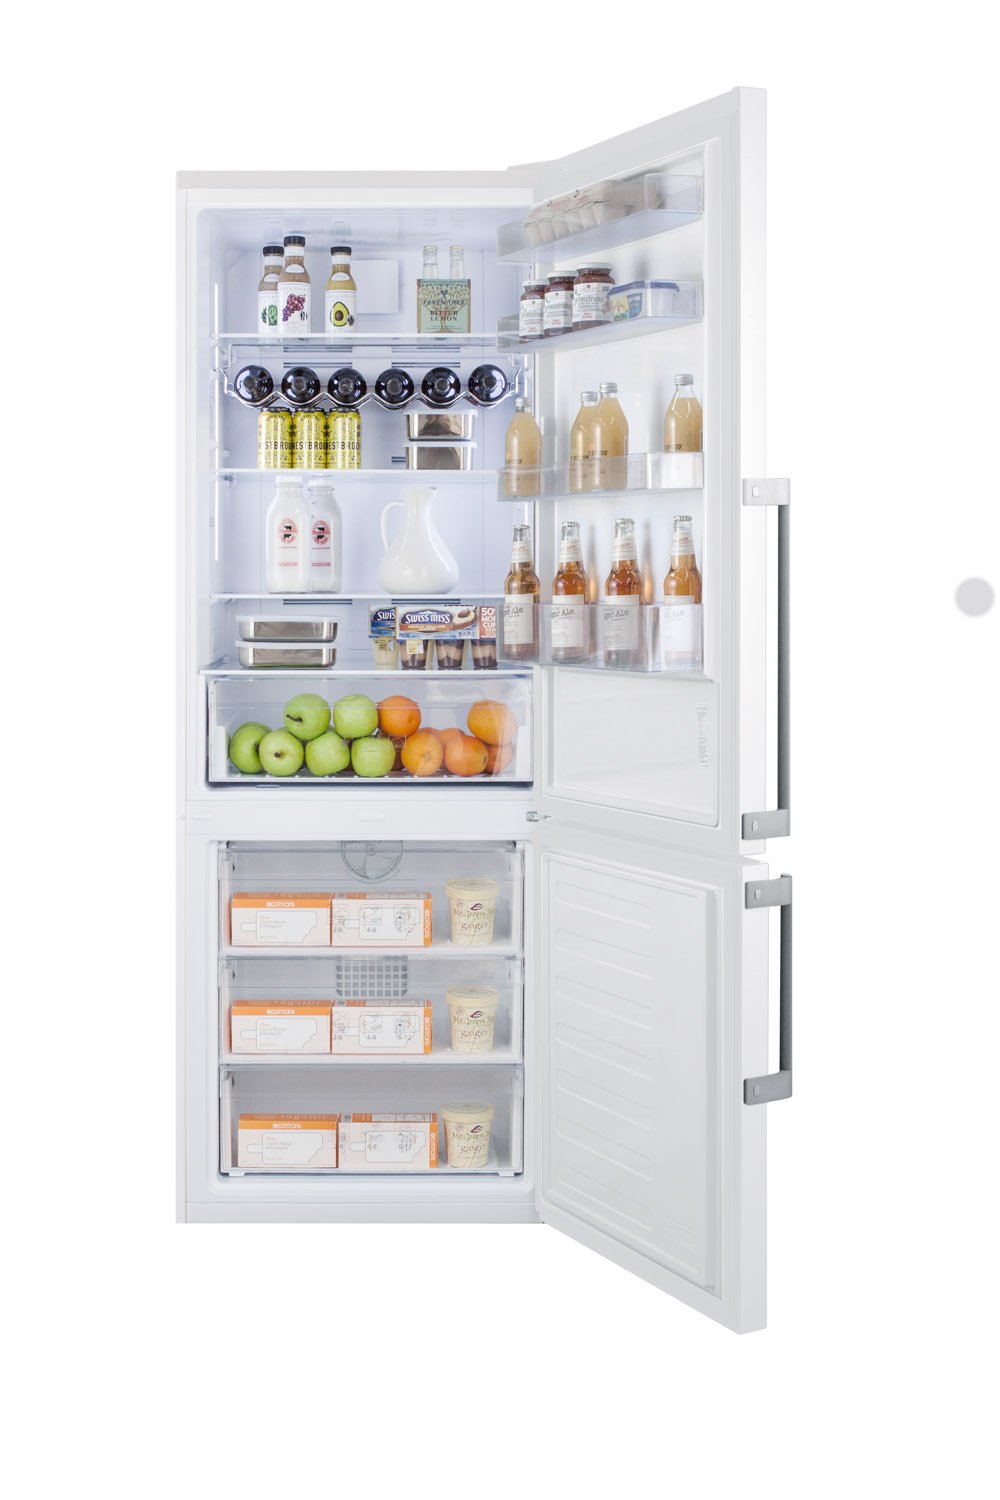 SUMMIT 28 in. Counter-Depth Bottom Freezer Refrigerator in White (FFBF281W)